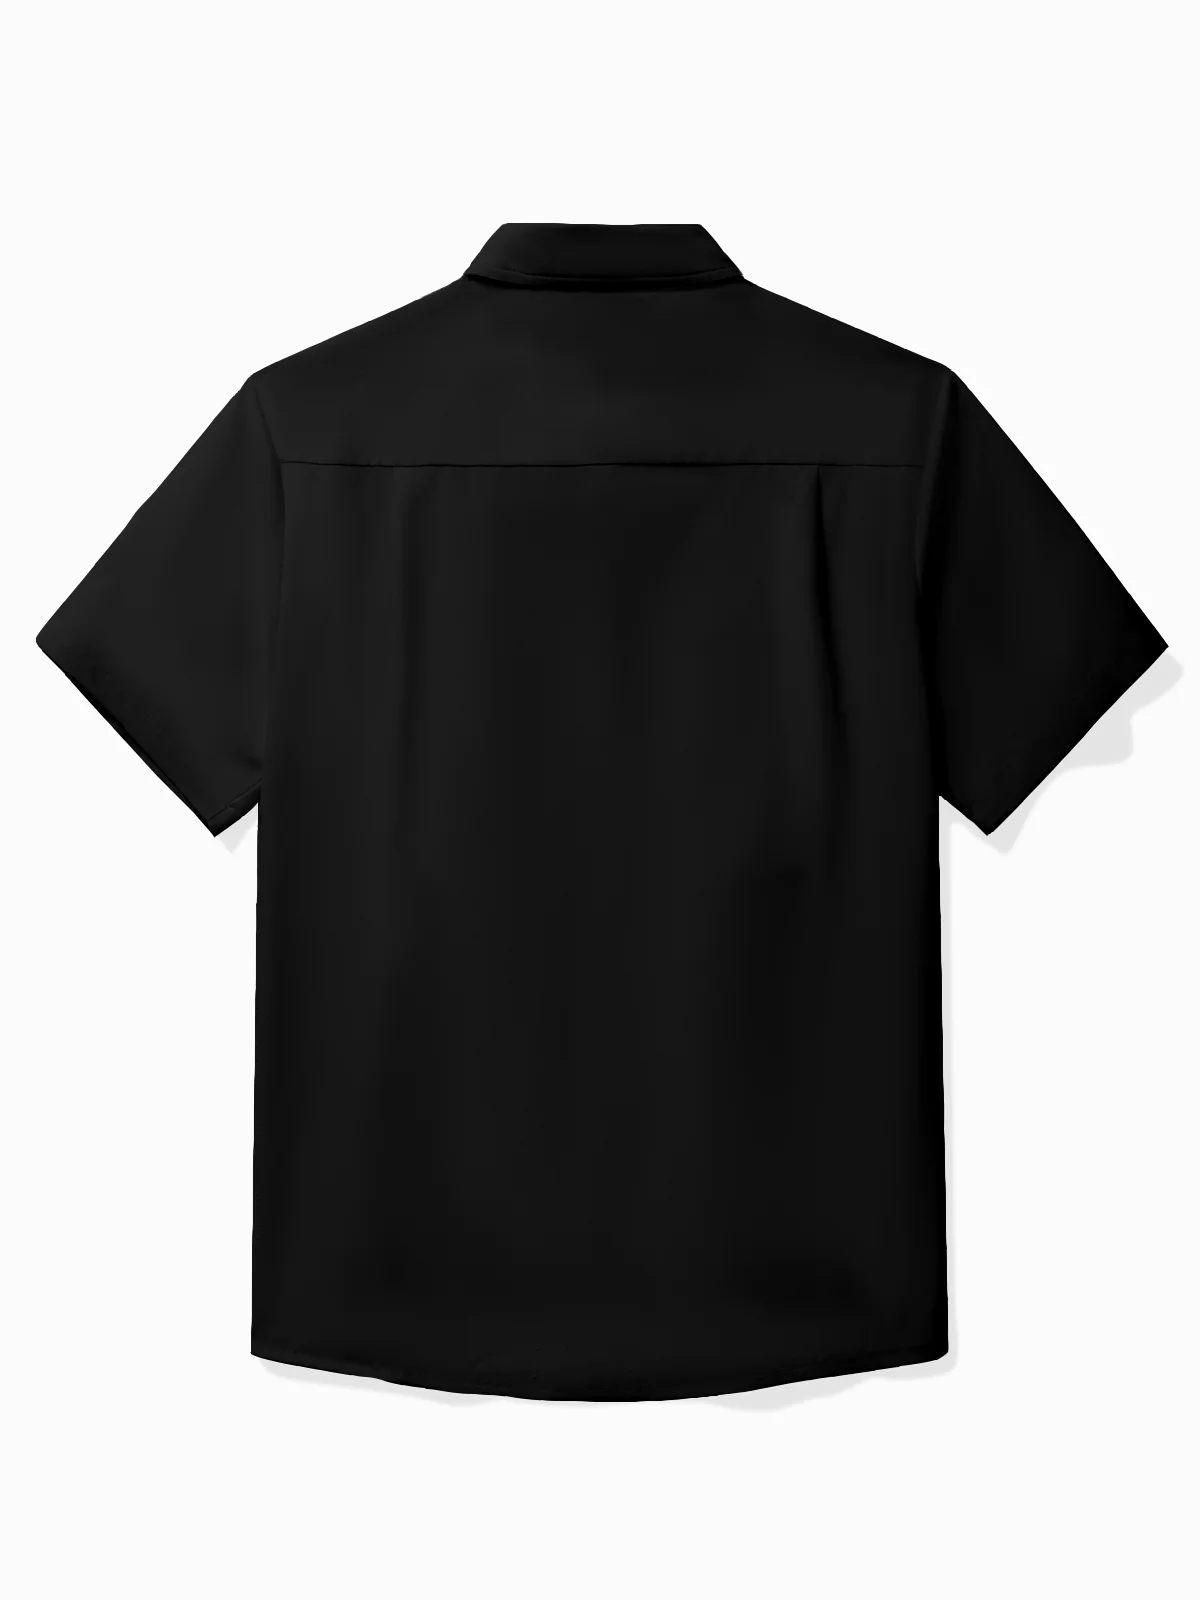 Royaura® Vintage Car Pinstripe Panel BowIng Printed Chest Pocket Shirt Plus Size Men's Shirt